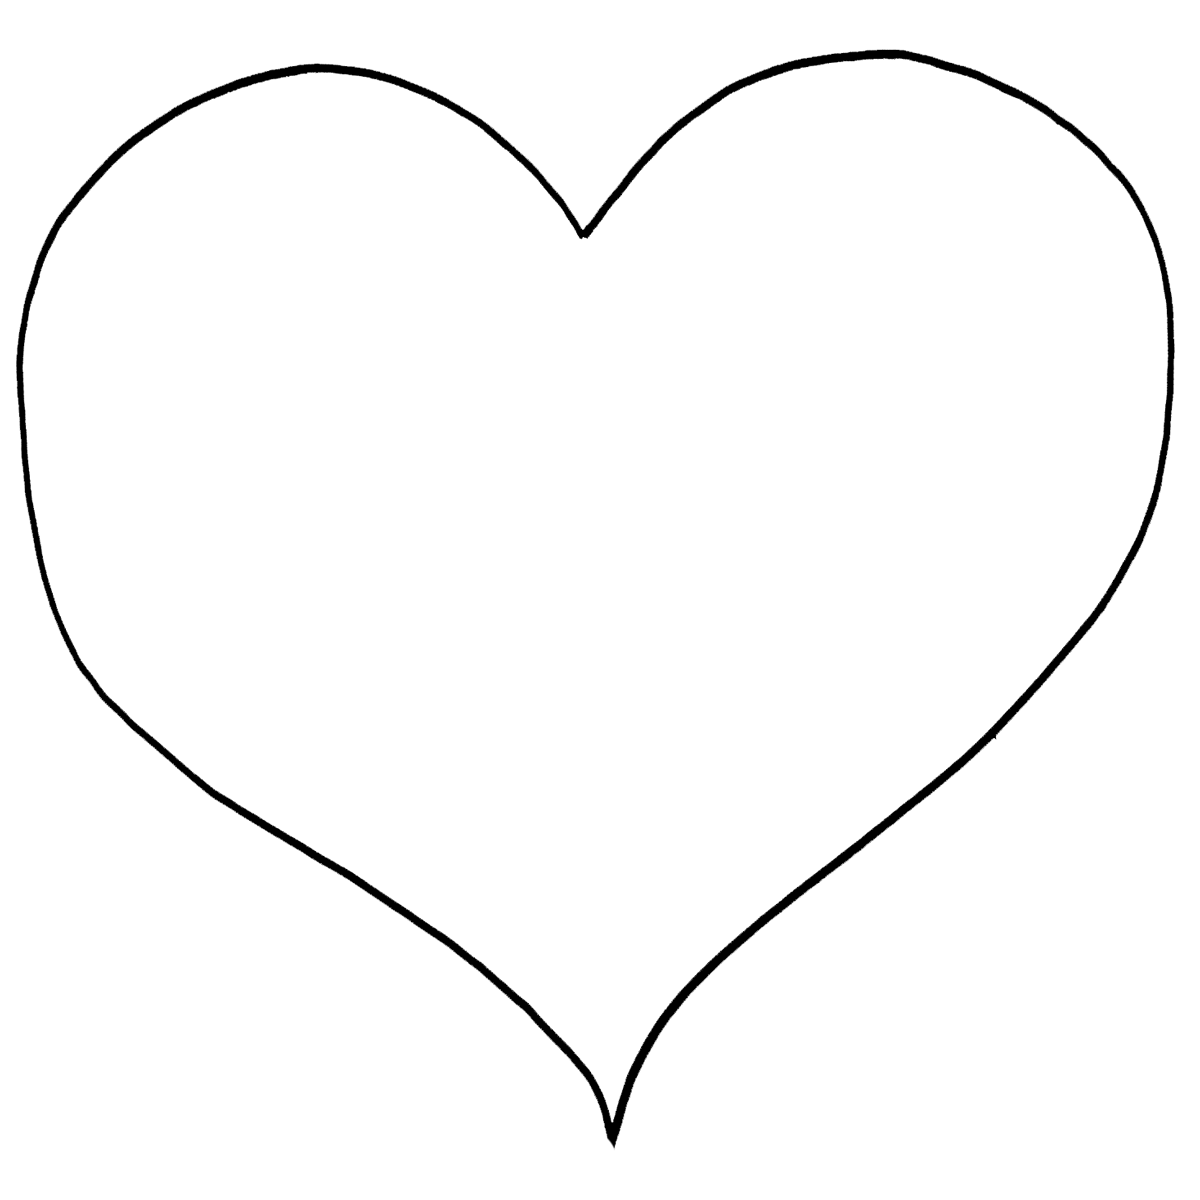 free printable hearts 6 free printable heart templates download heart free printable hearts 